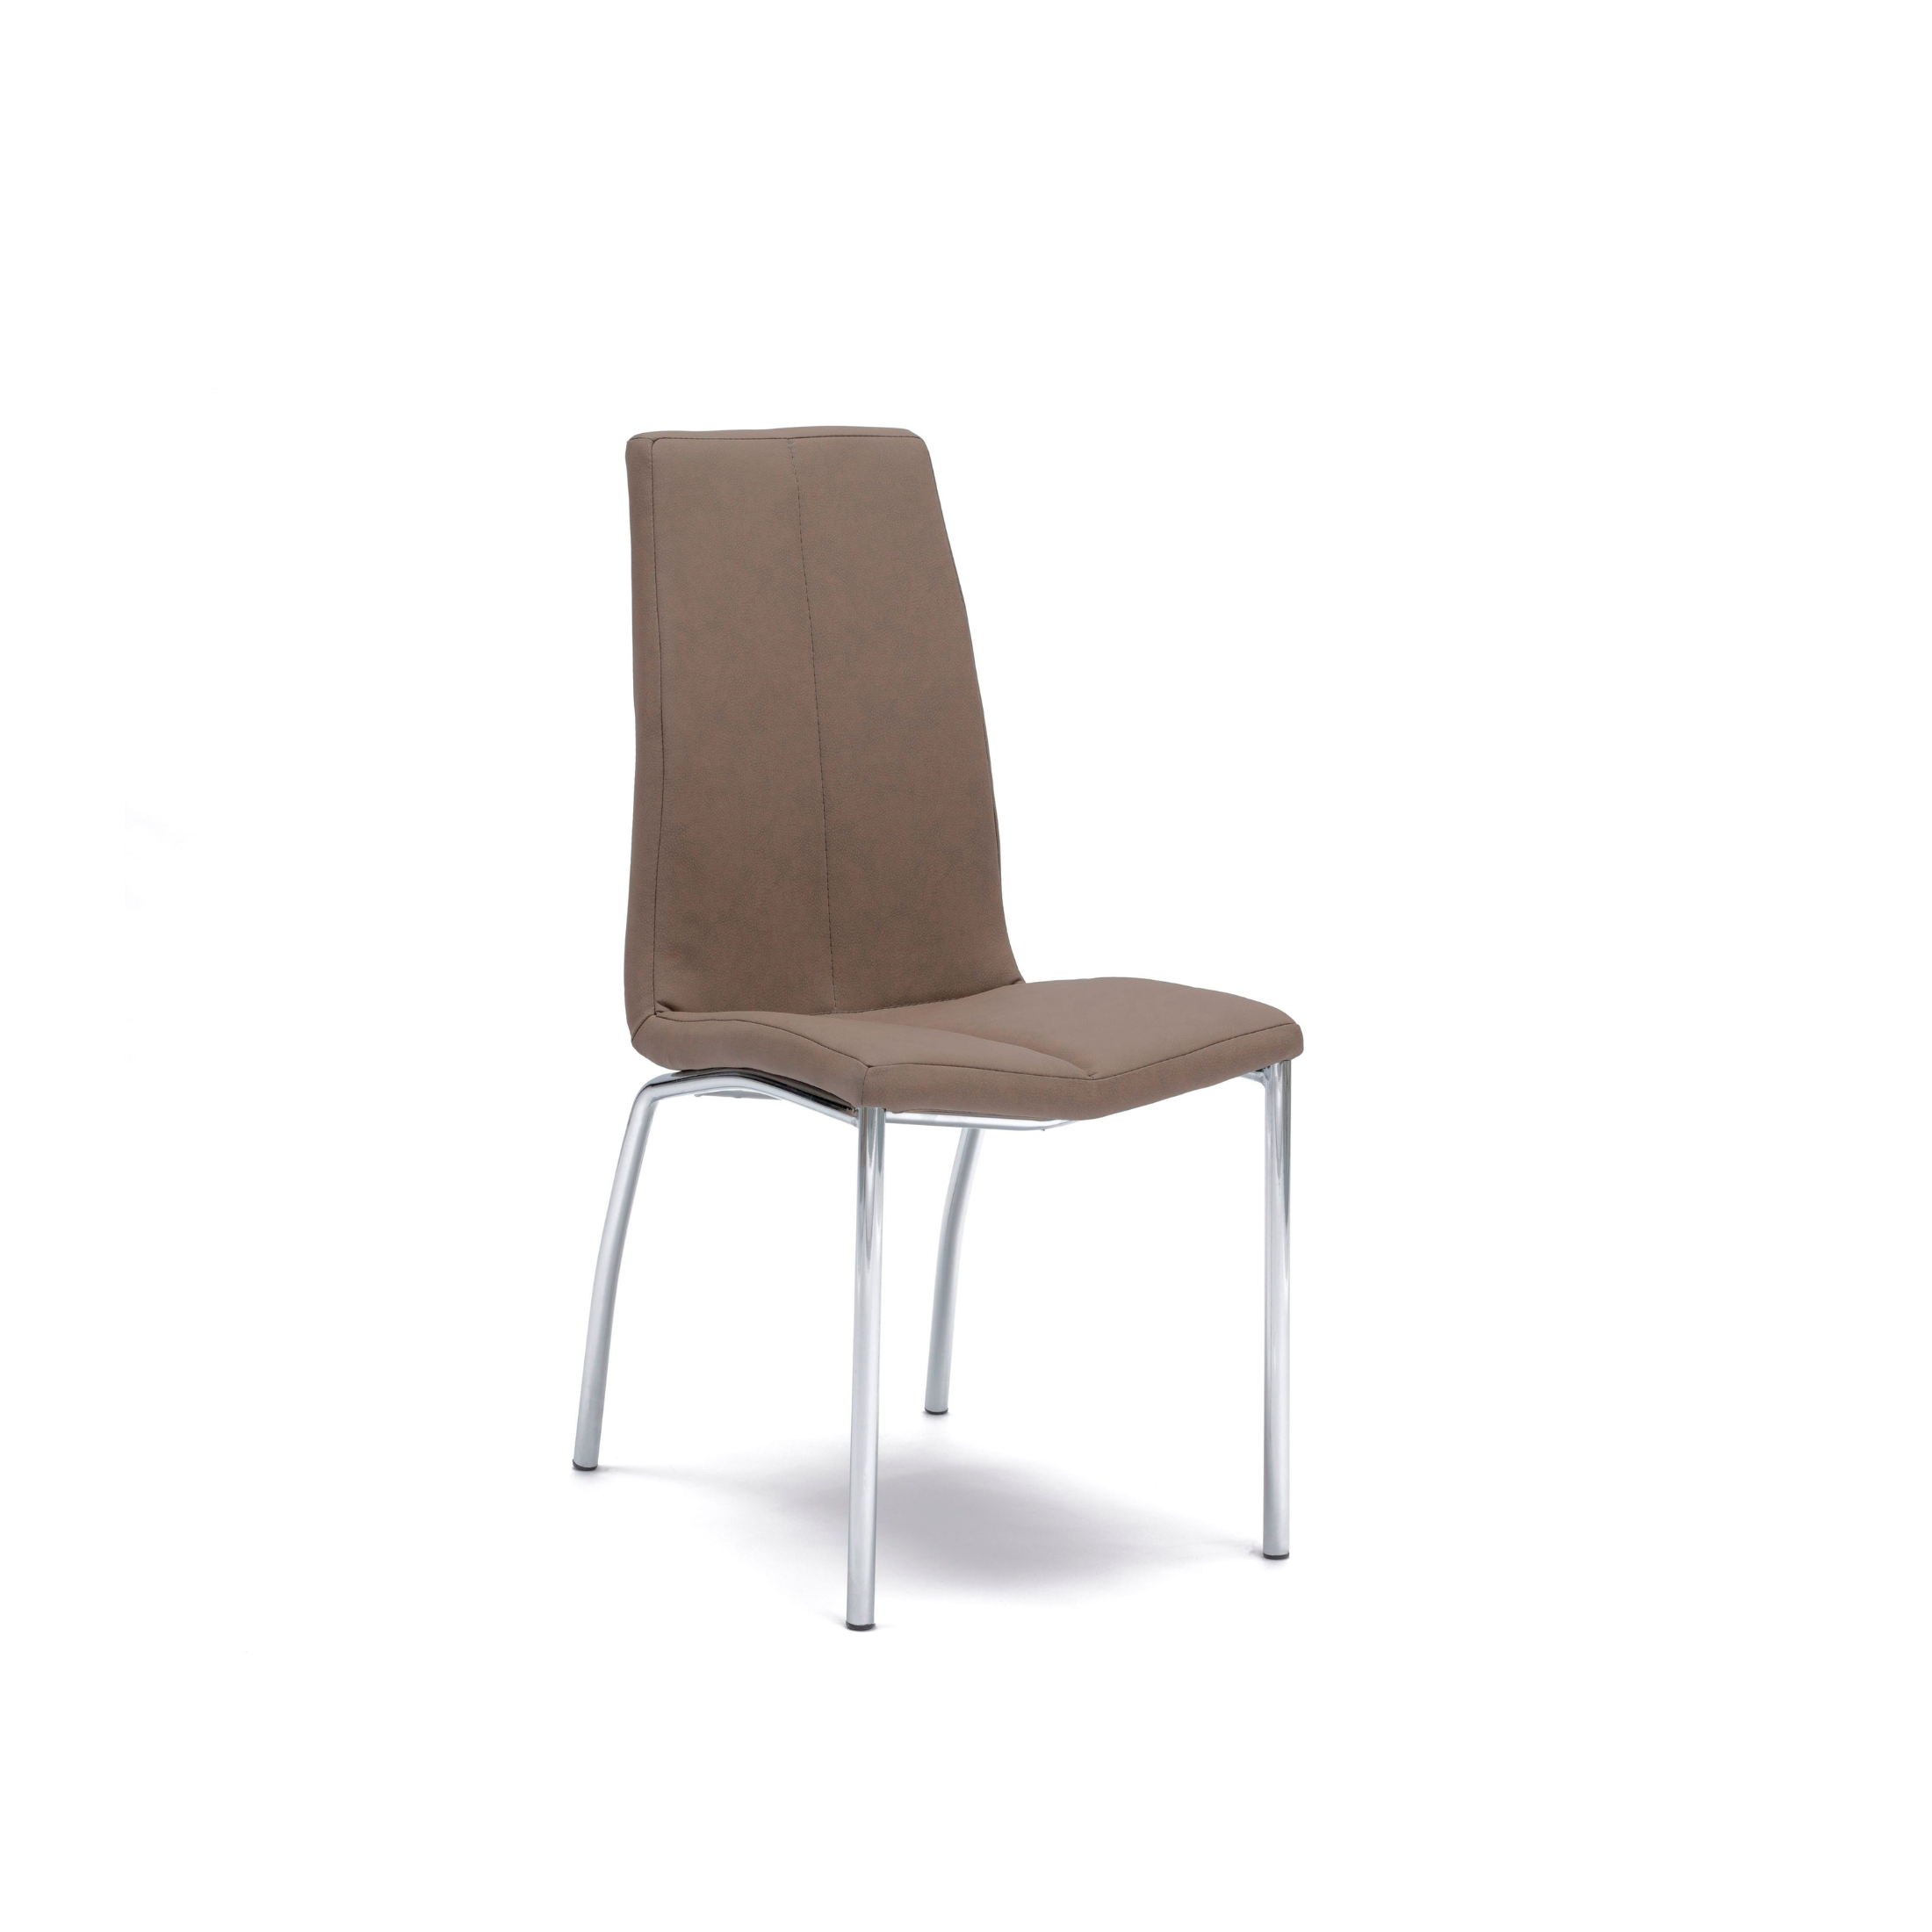 Set di sedie imbottite in similpelle "Viva" moderne con gambe in metallo cm 44x43 92h